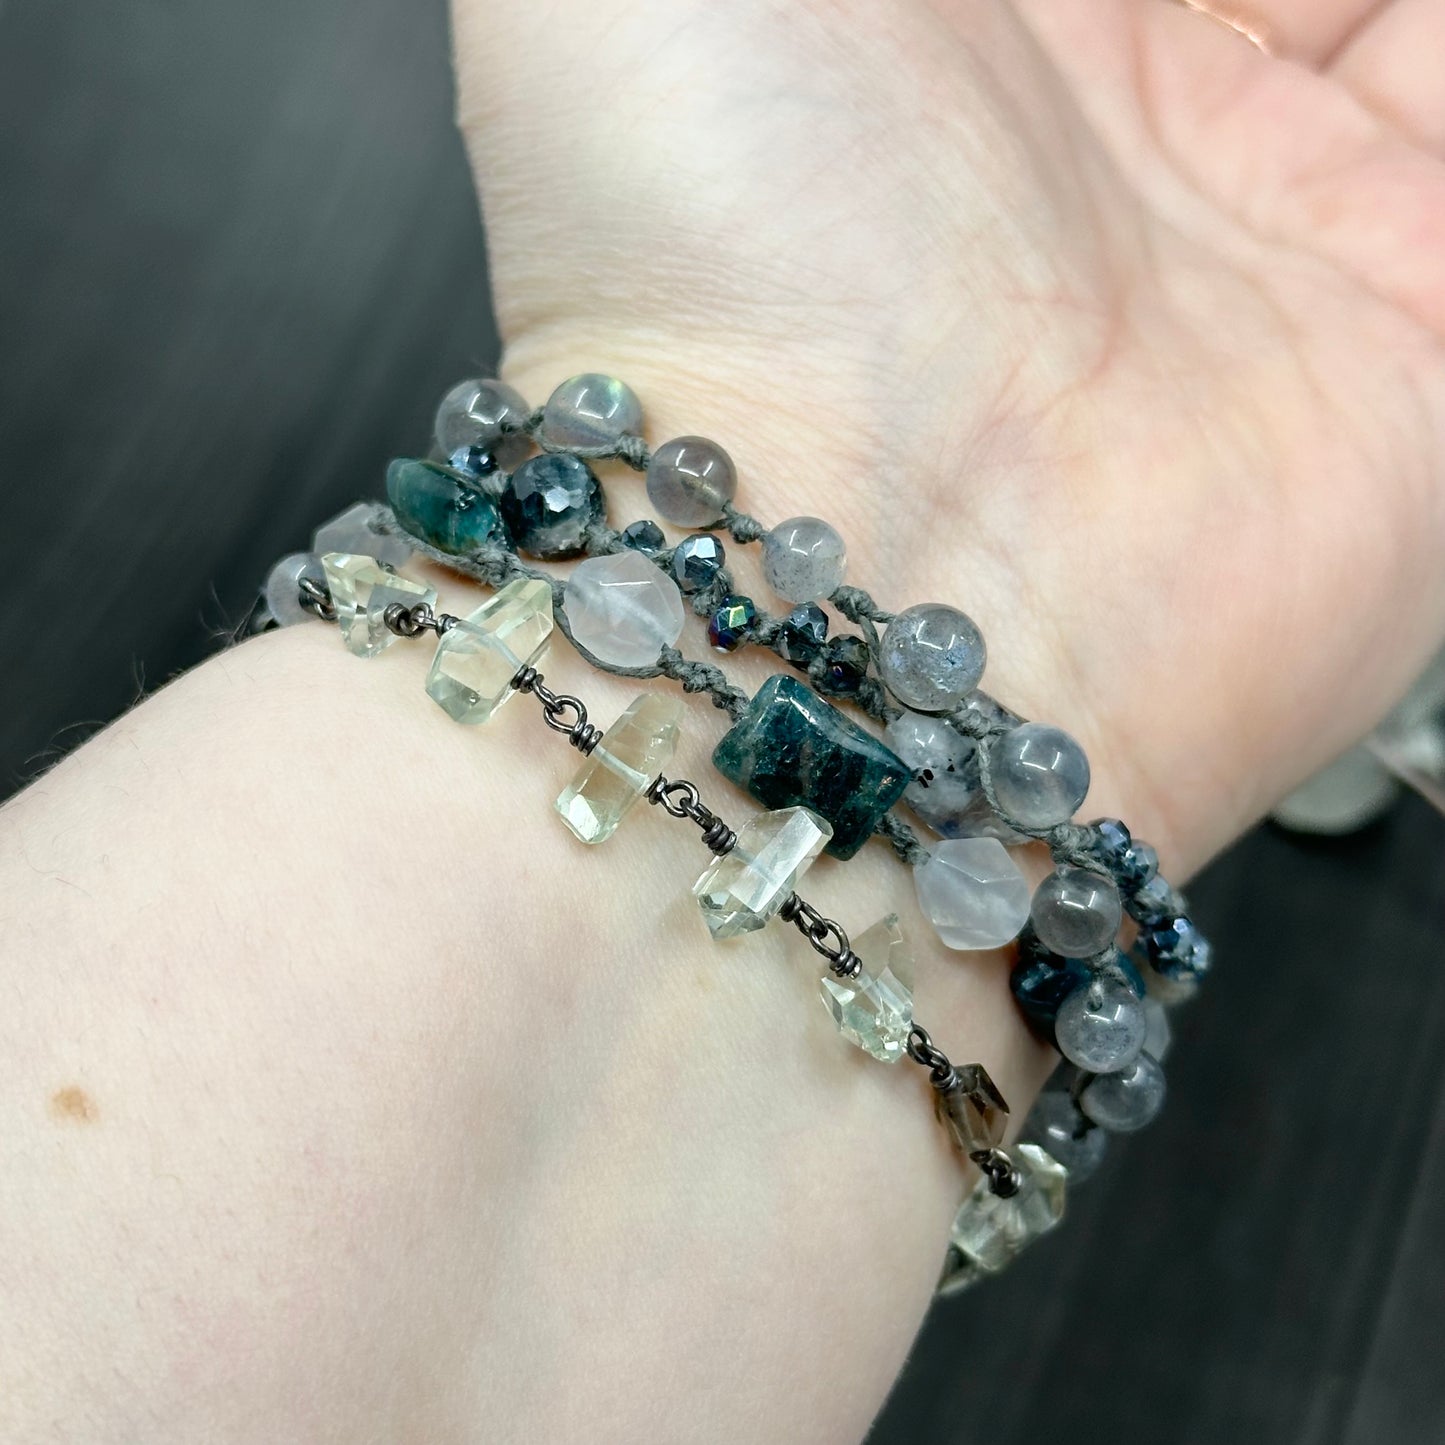 Mystic Wrap Bracelet with Stunning Gems